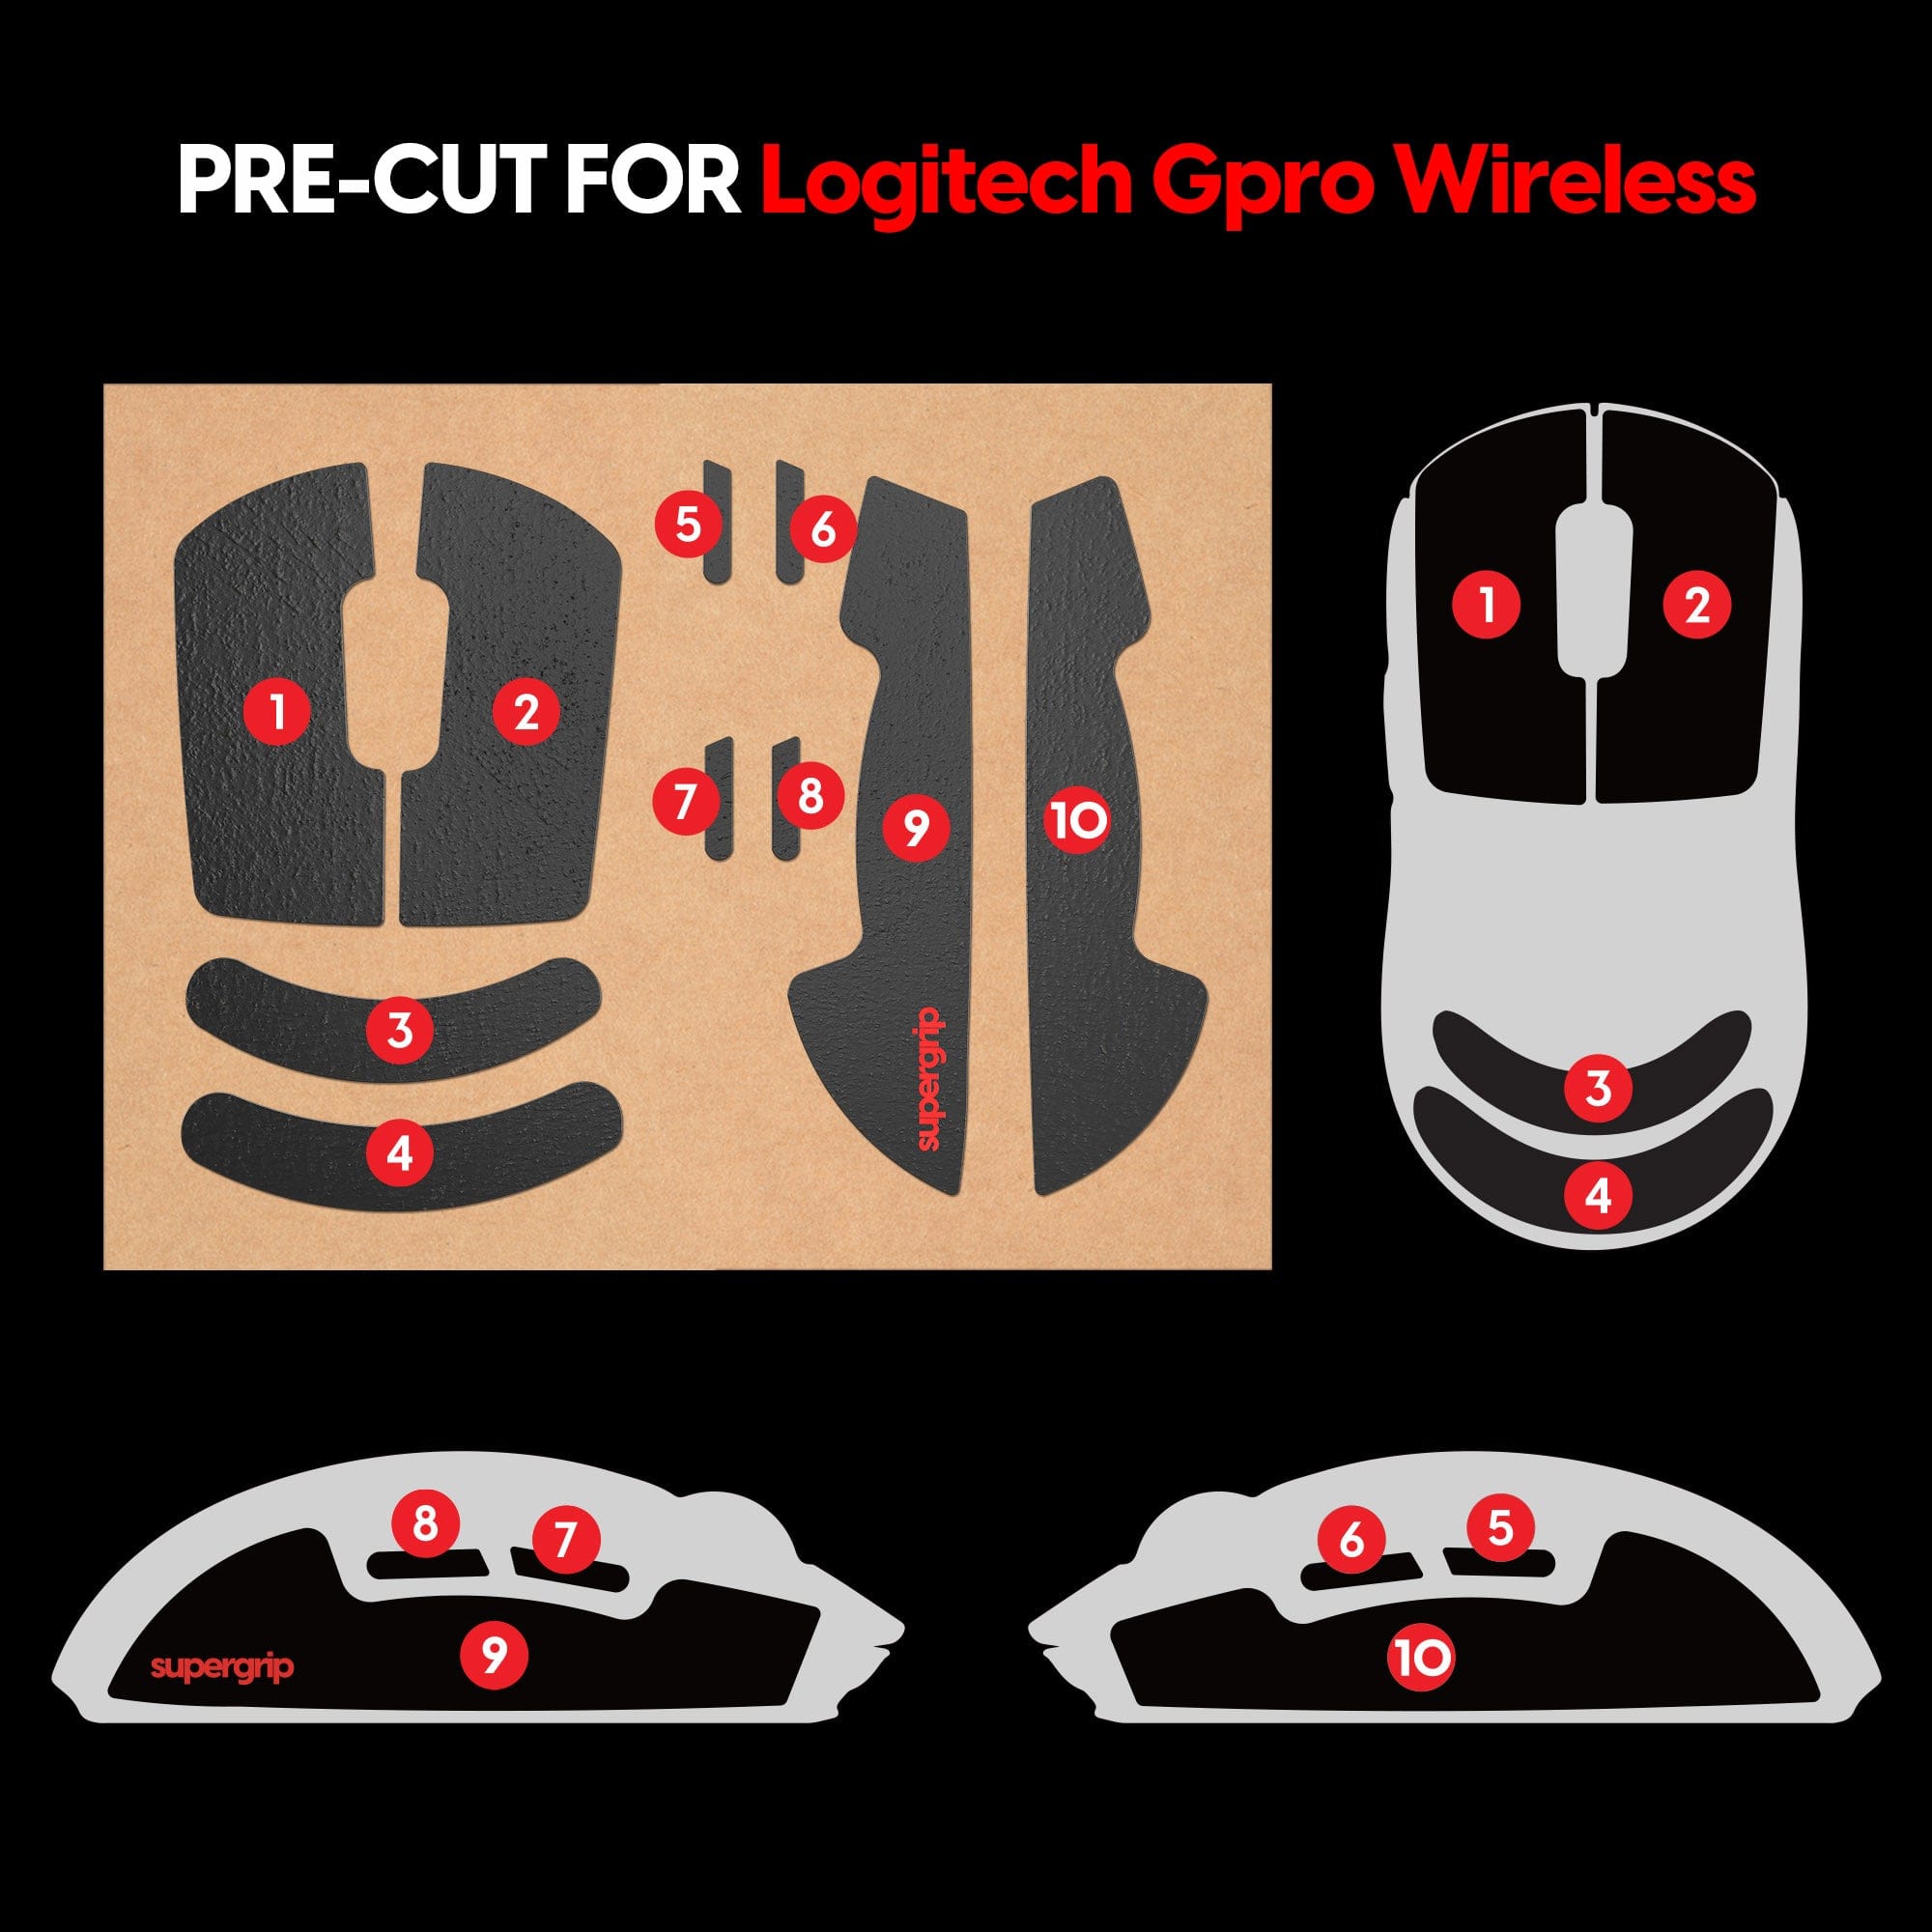 Miếng dán chống trượt Pulsar Supergrip - Grip Tape Precut for Logitech G Pro Wireless